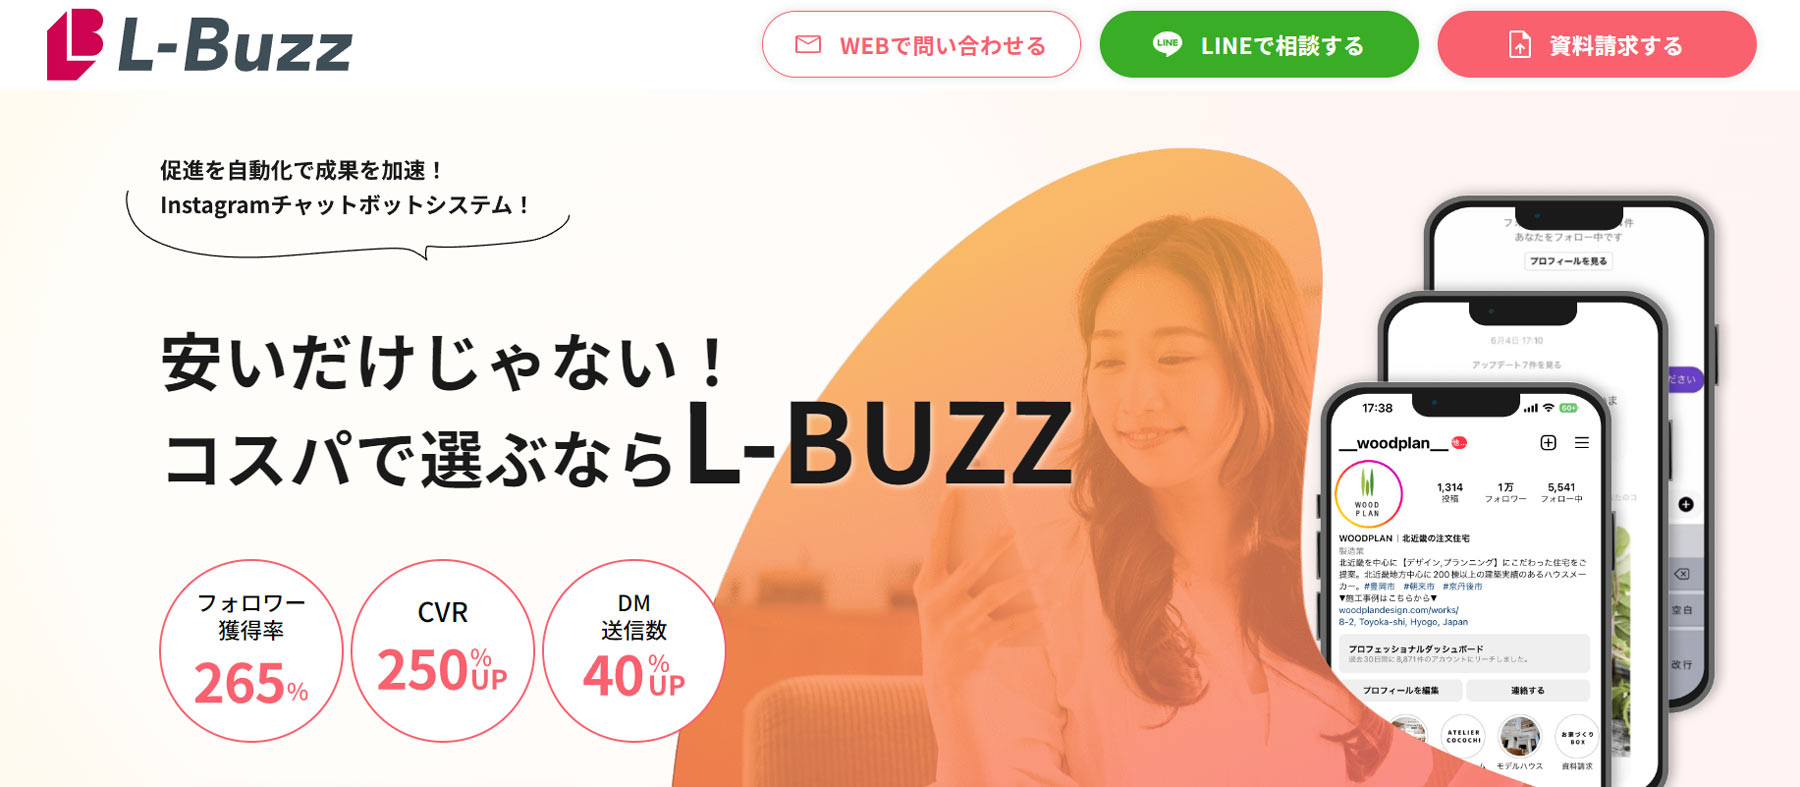 L-BUZZ公式Webサイト